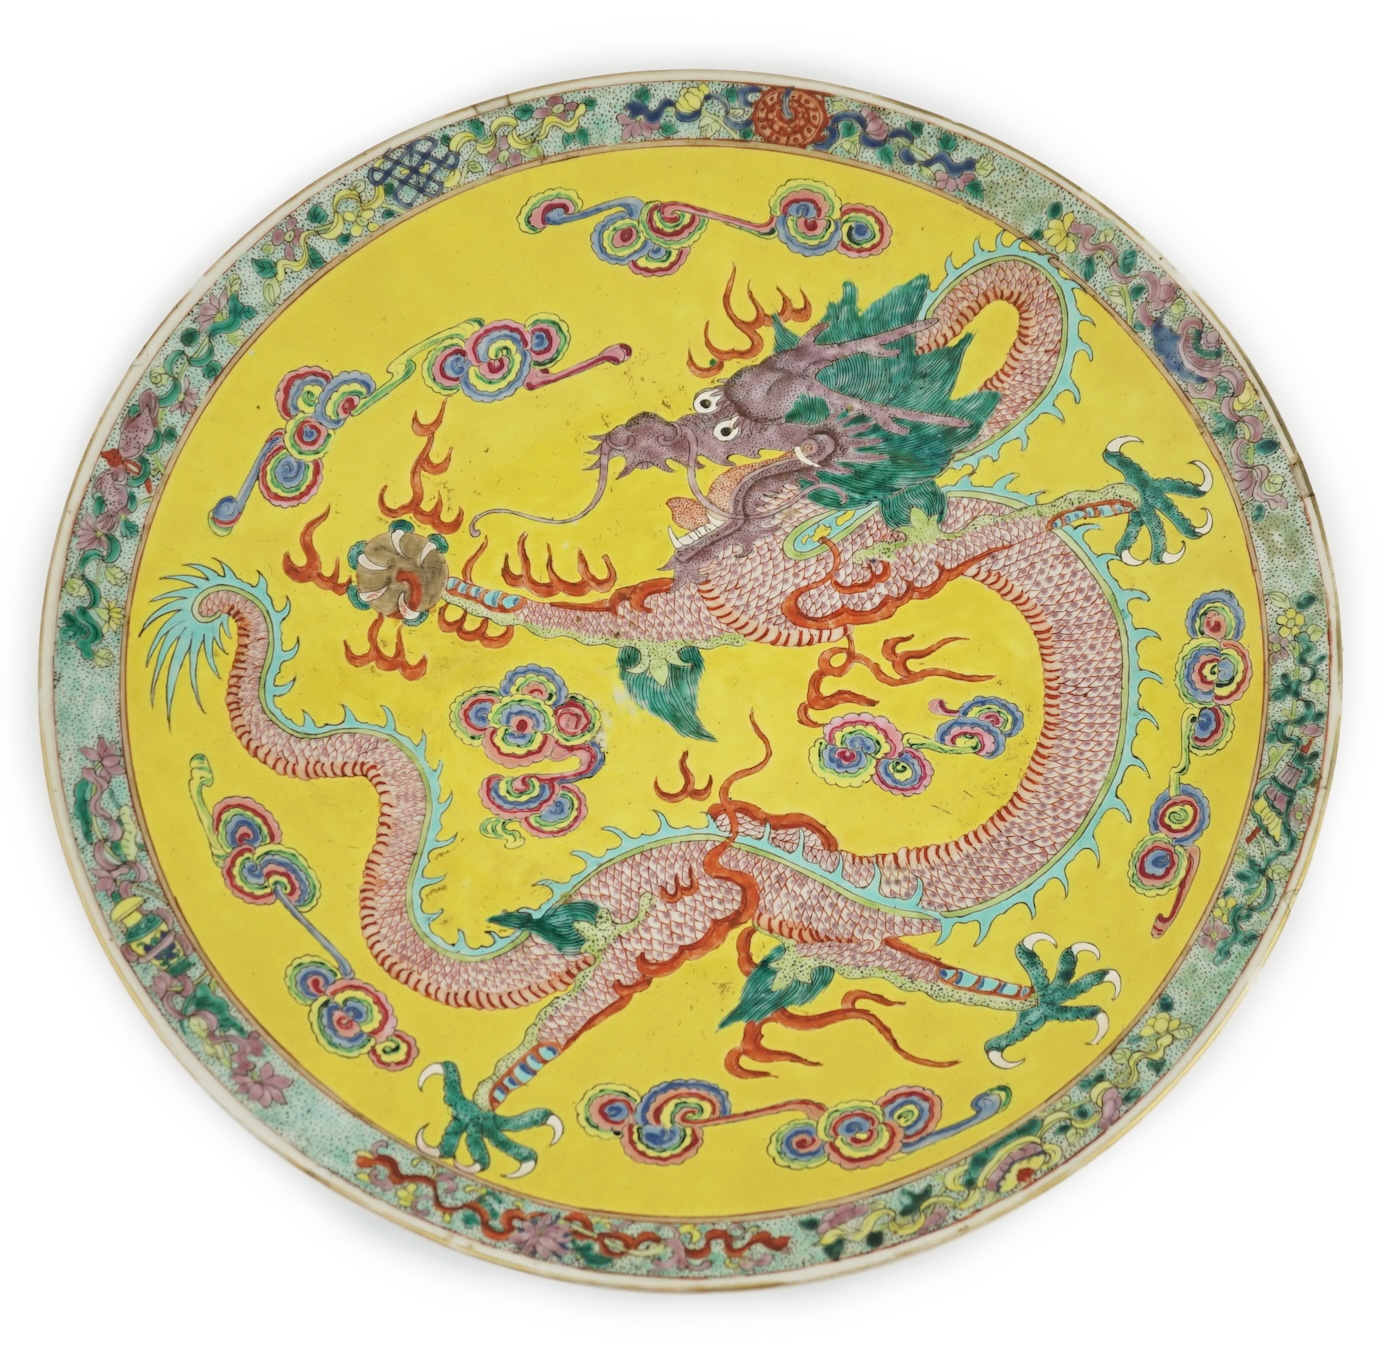 A Chinese yellow ground ‘dragon’ dish, late 19th century, minor damage